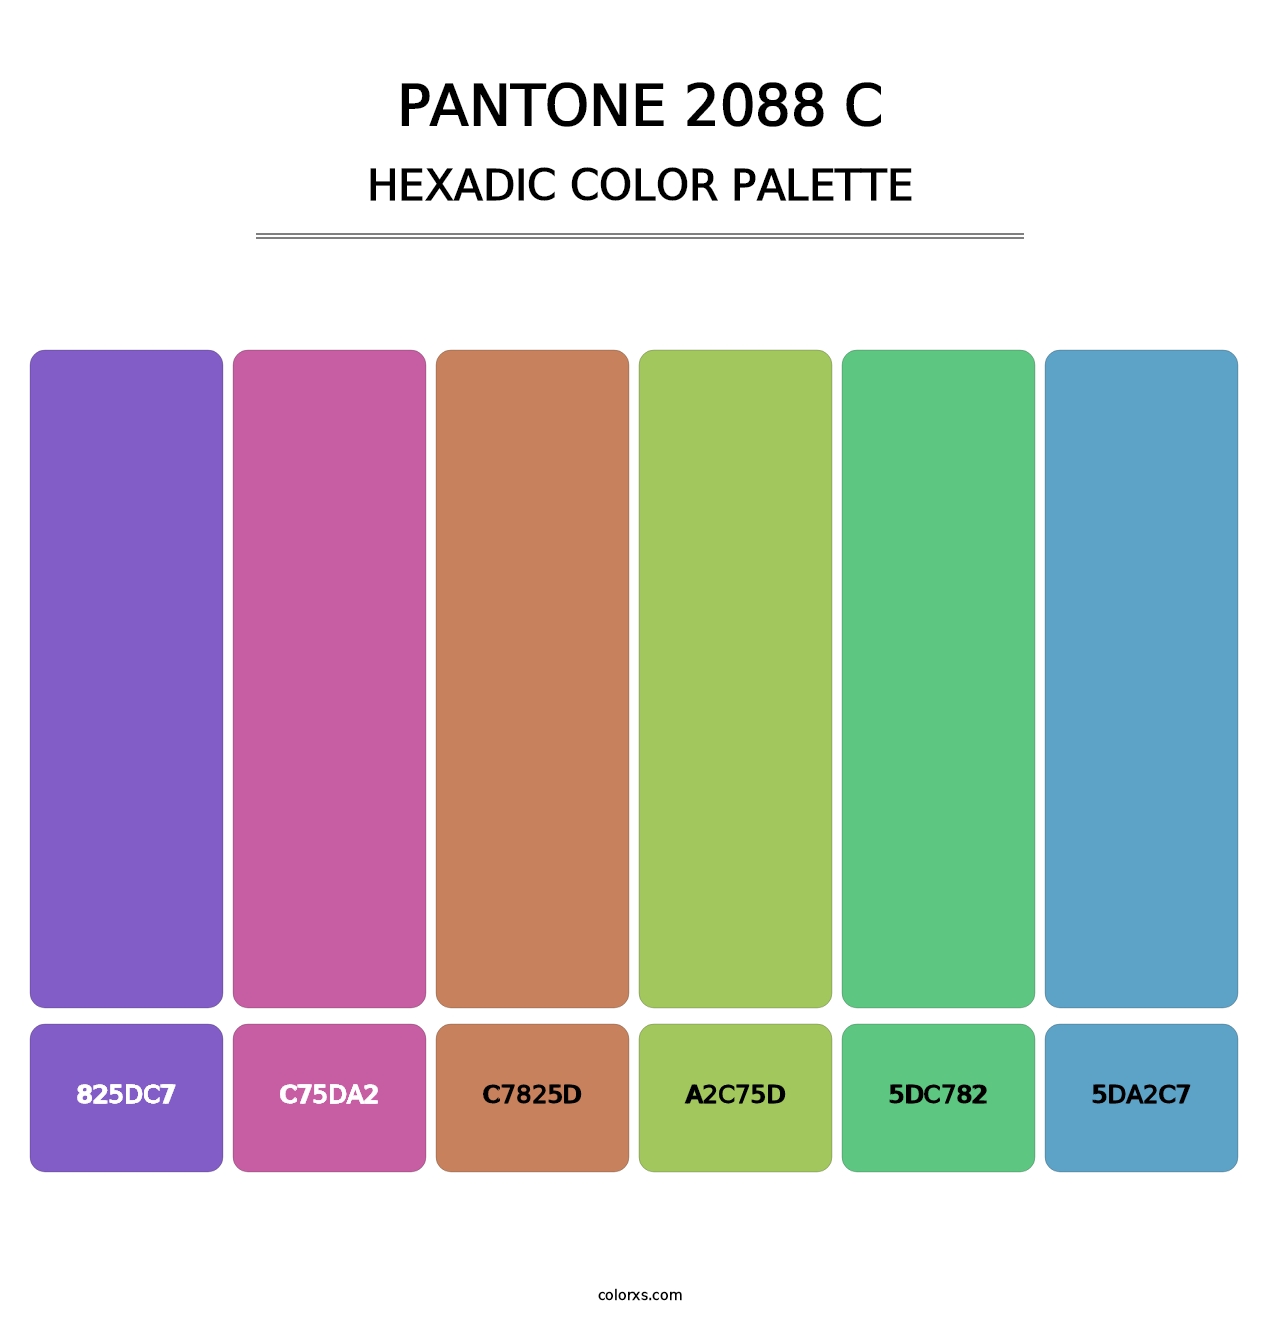 PANTONE 2088 C - Hexadic Color Palette